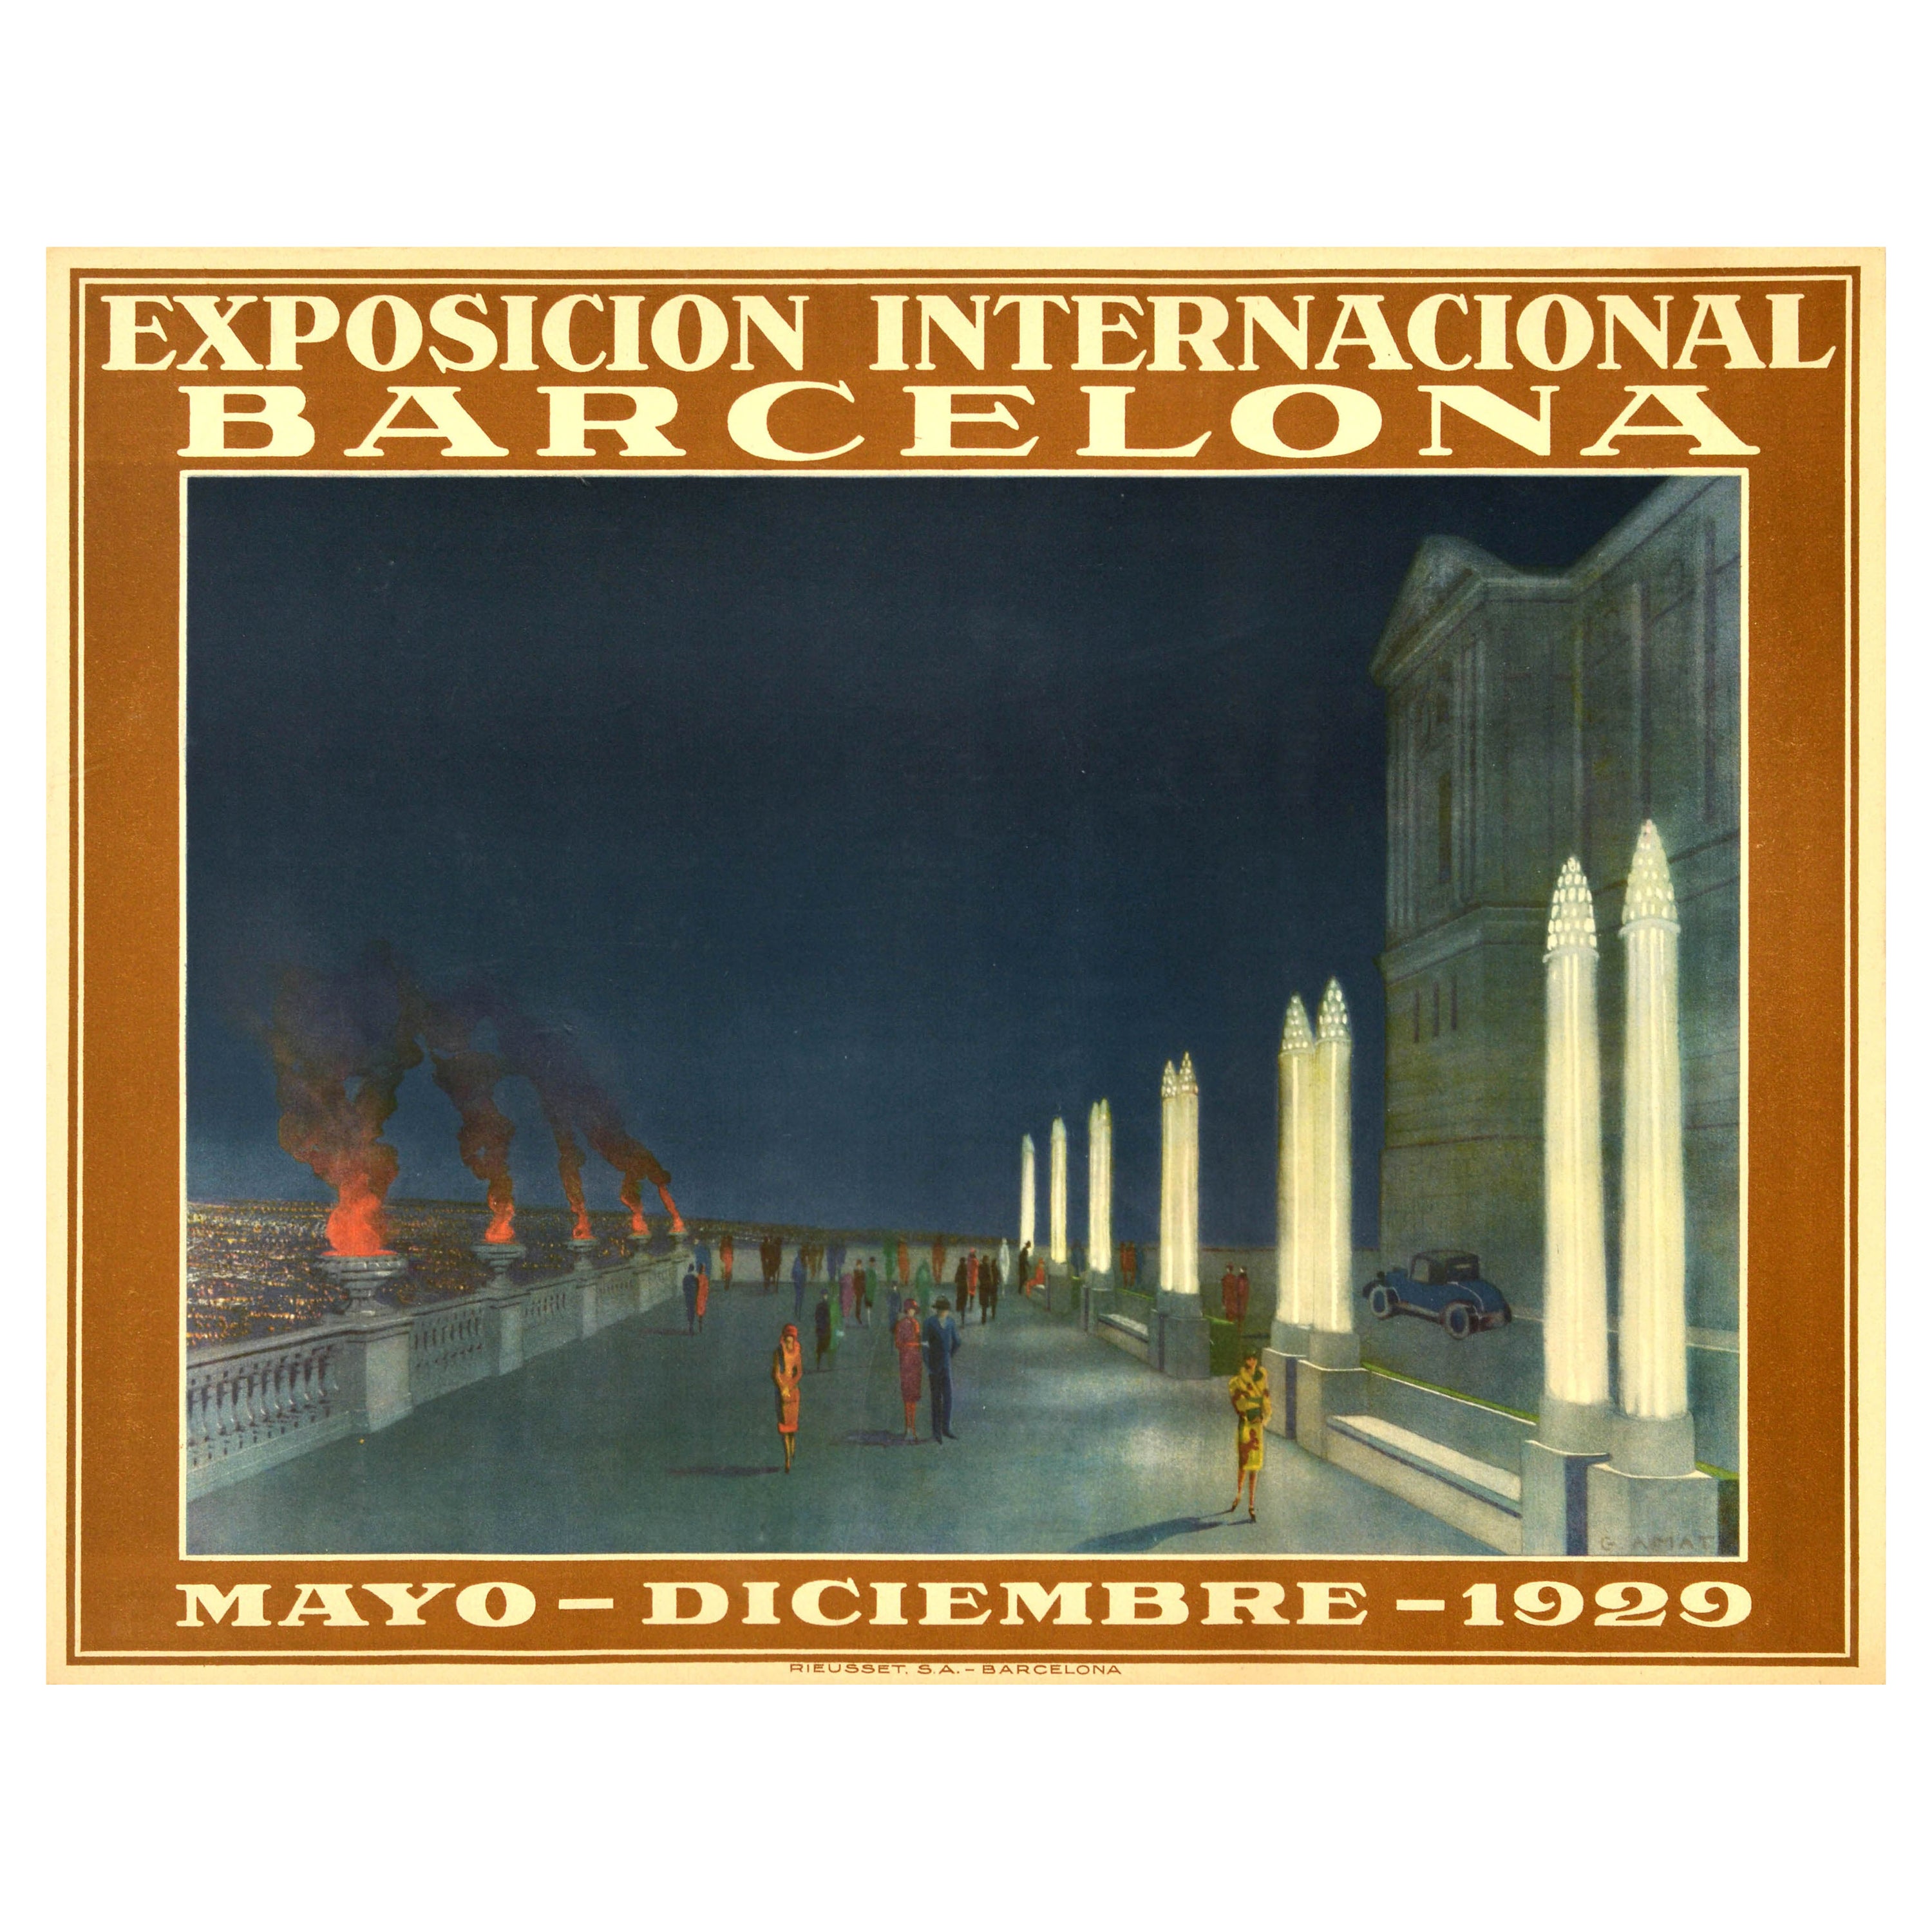 Original Vintage Advertising Poster Barcelona International Exposition 1929 Fair For Sale